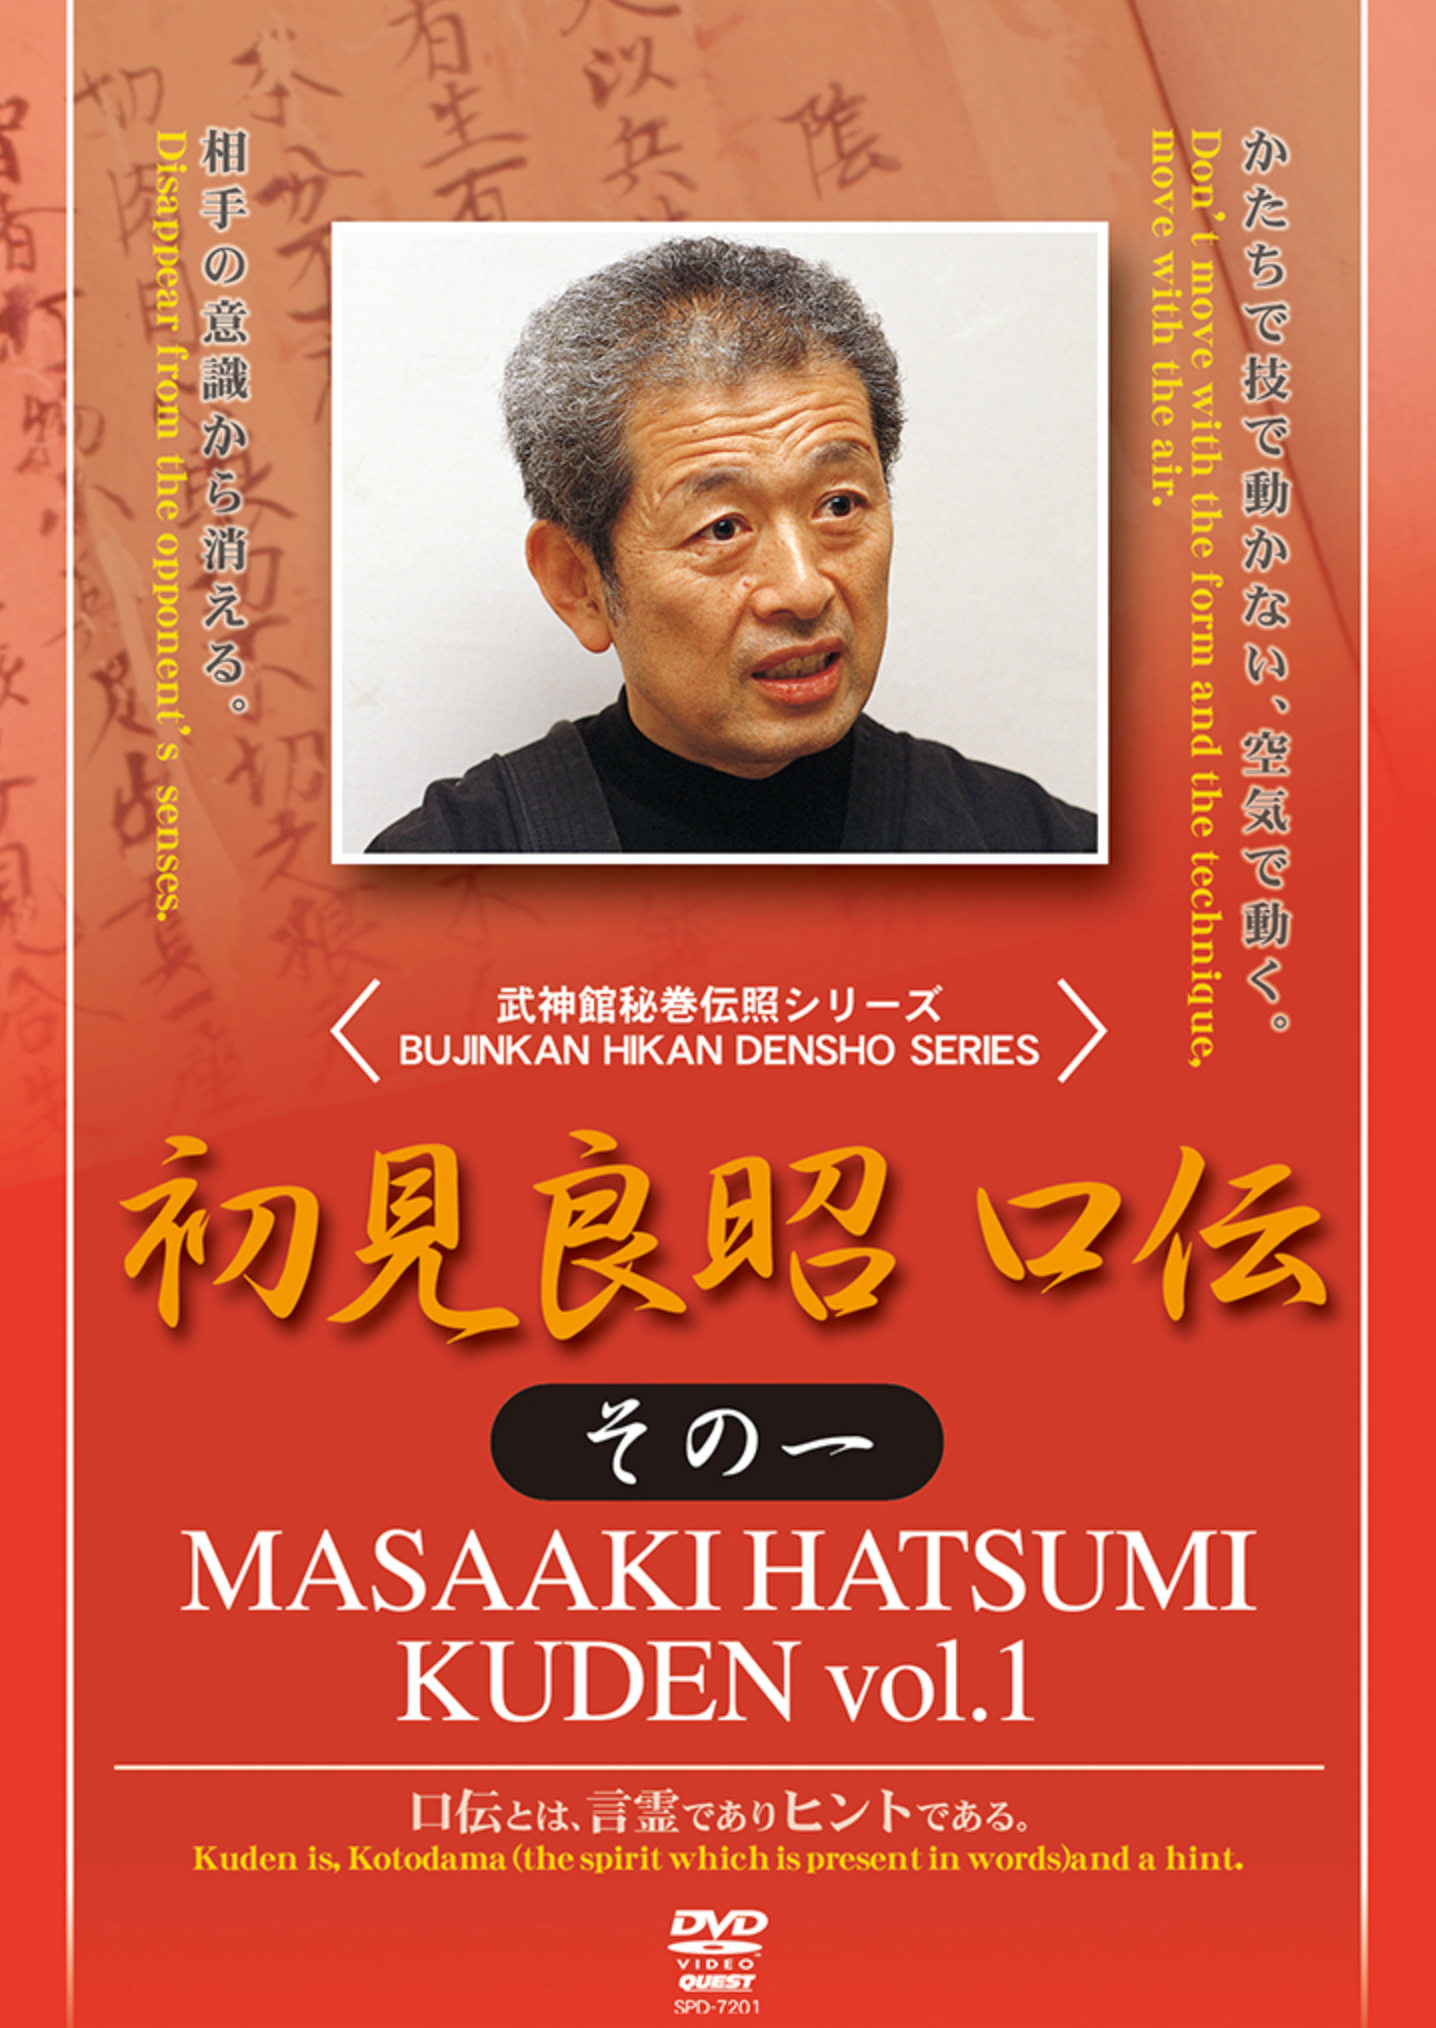 Kuden Vol 1 DVD with Masaaki Hatsumi - Budovideos Inc